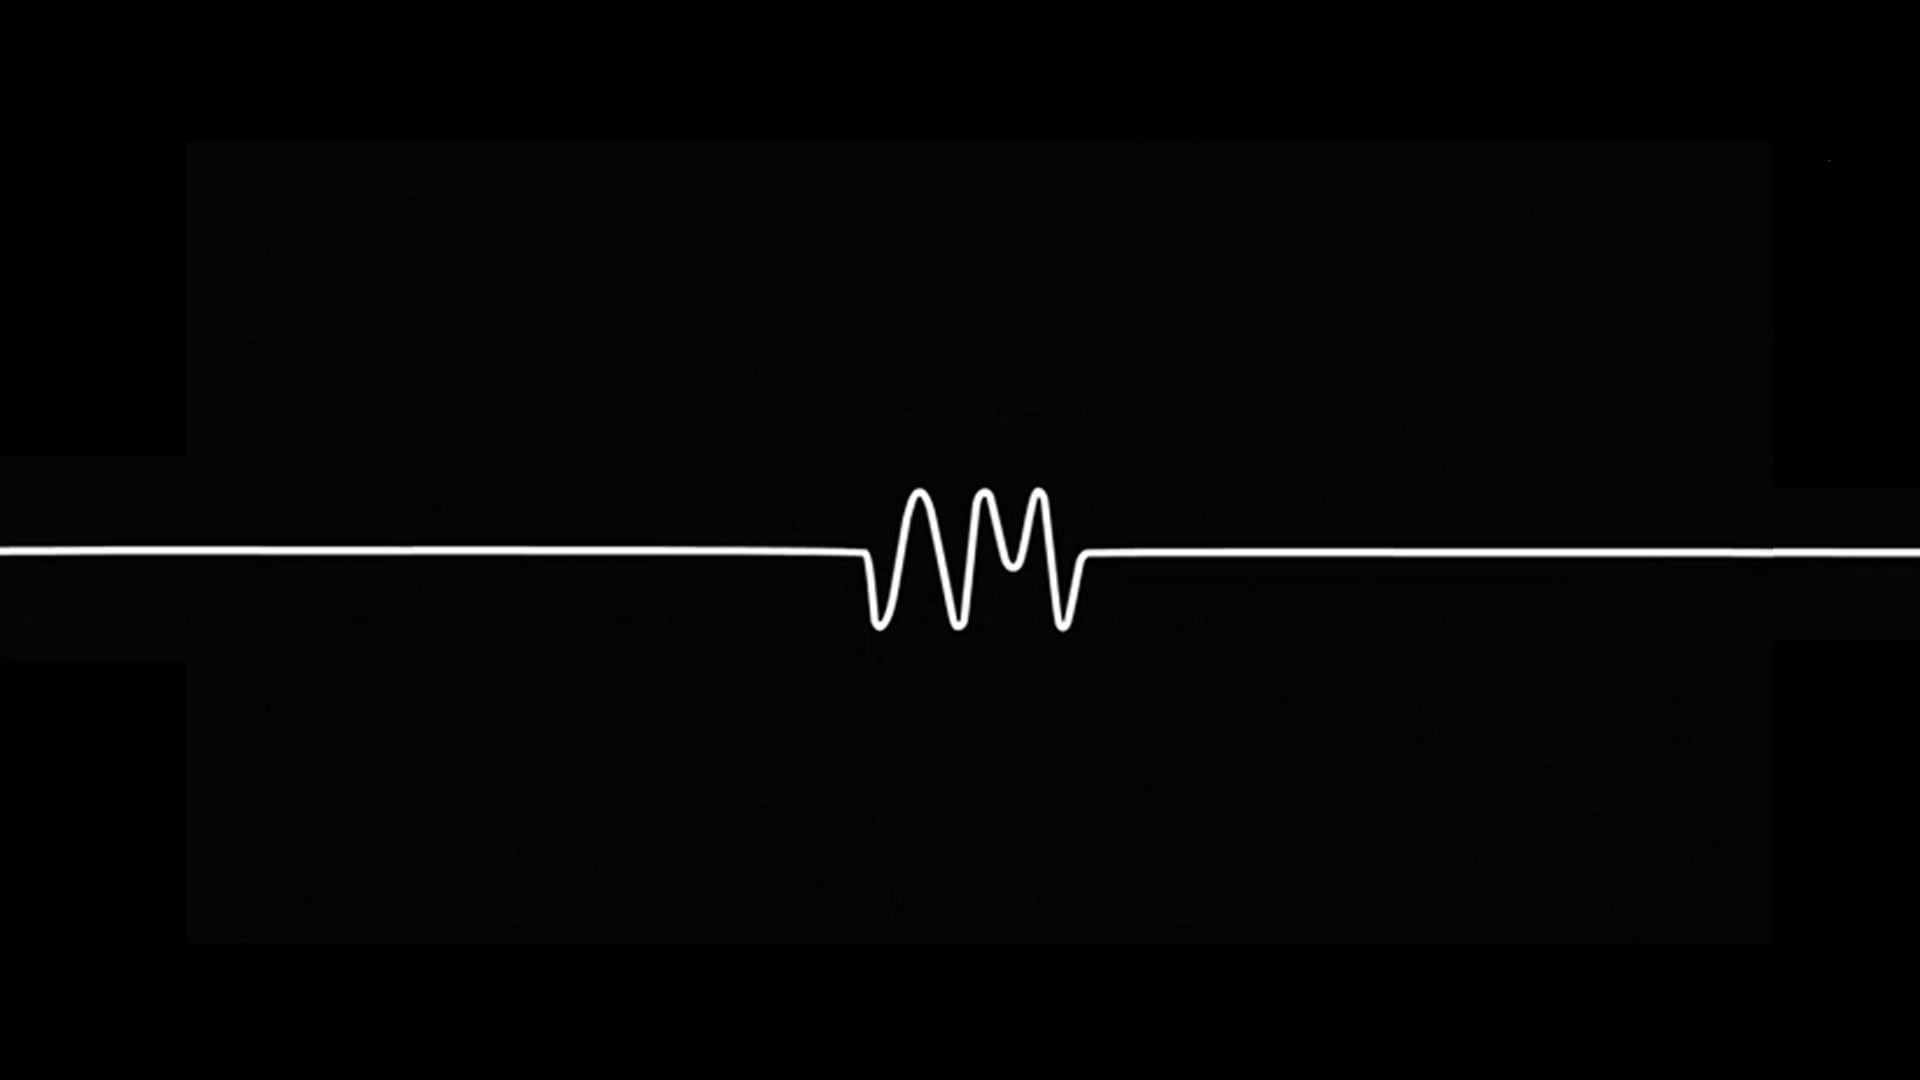 Seismograph line wallpaper, Arctic Monkeys, minimalism